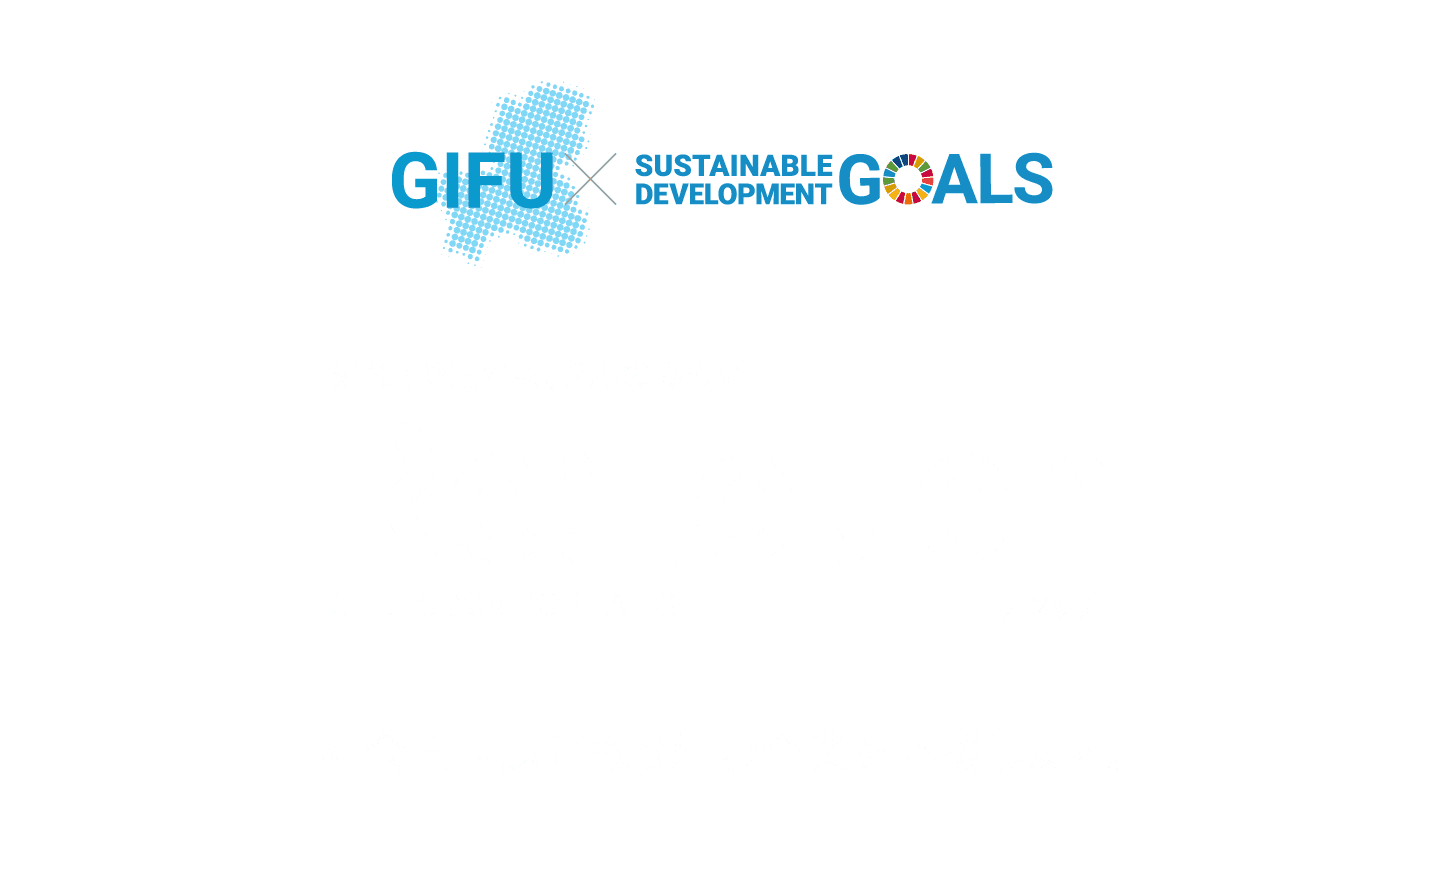 Re:touch／社会的課題に取り組む企業を応援します。